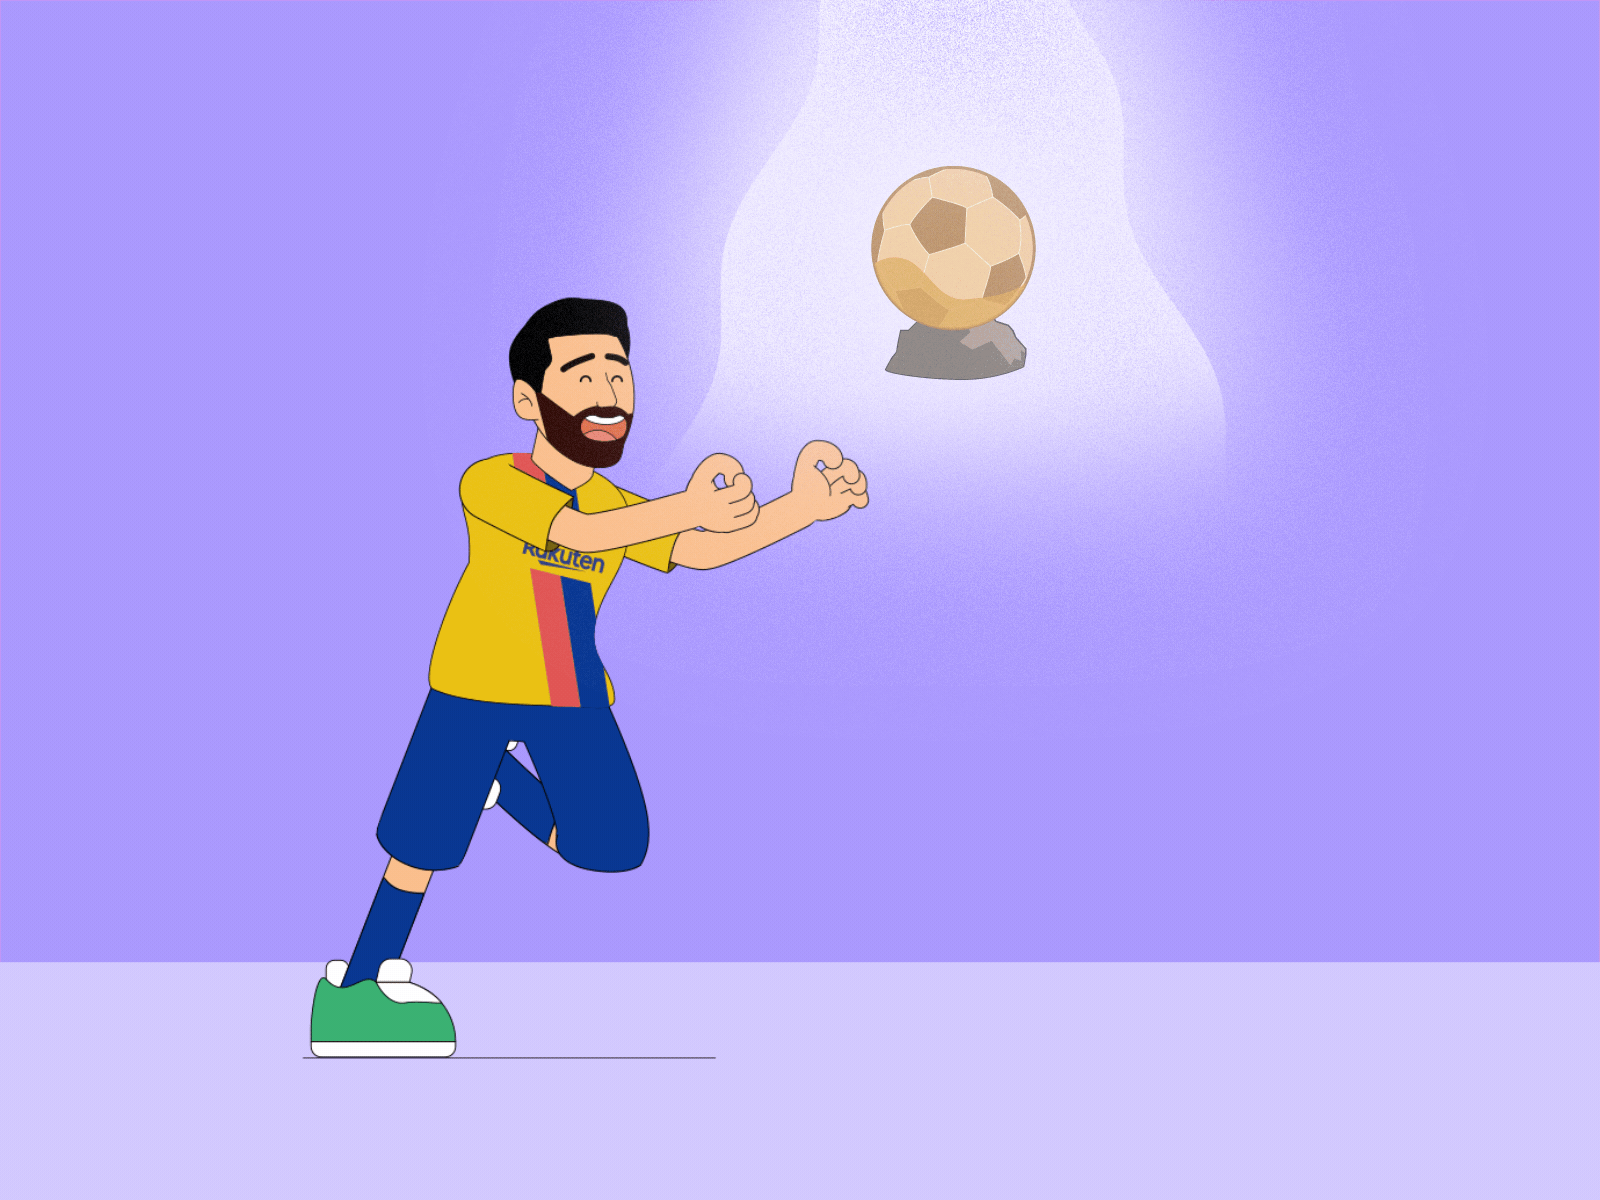 Messi's run